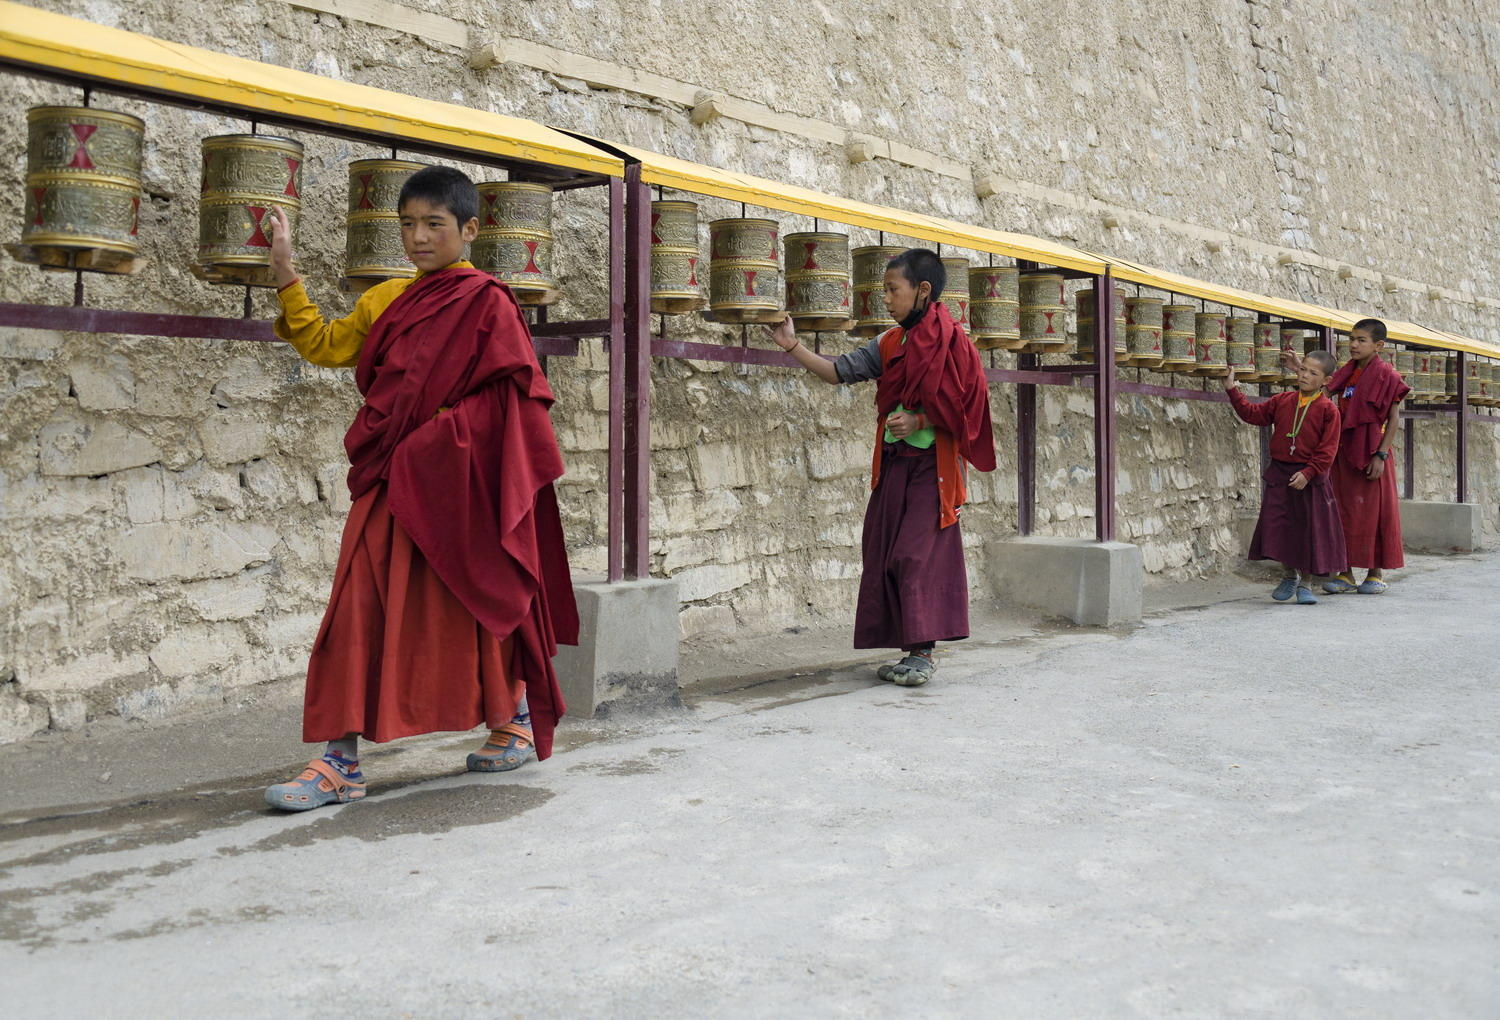 DSC_1307_1A2 - Spinning Prayer Wheels (Lamayuru Monastery)